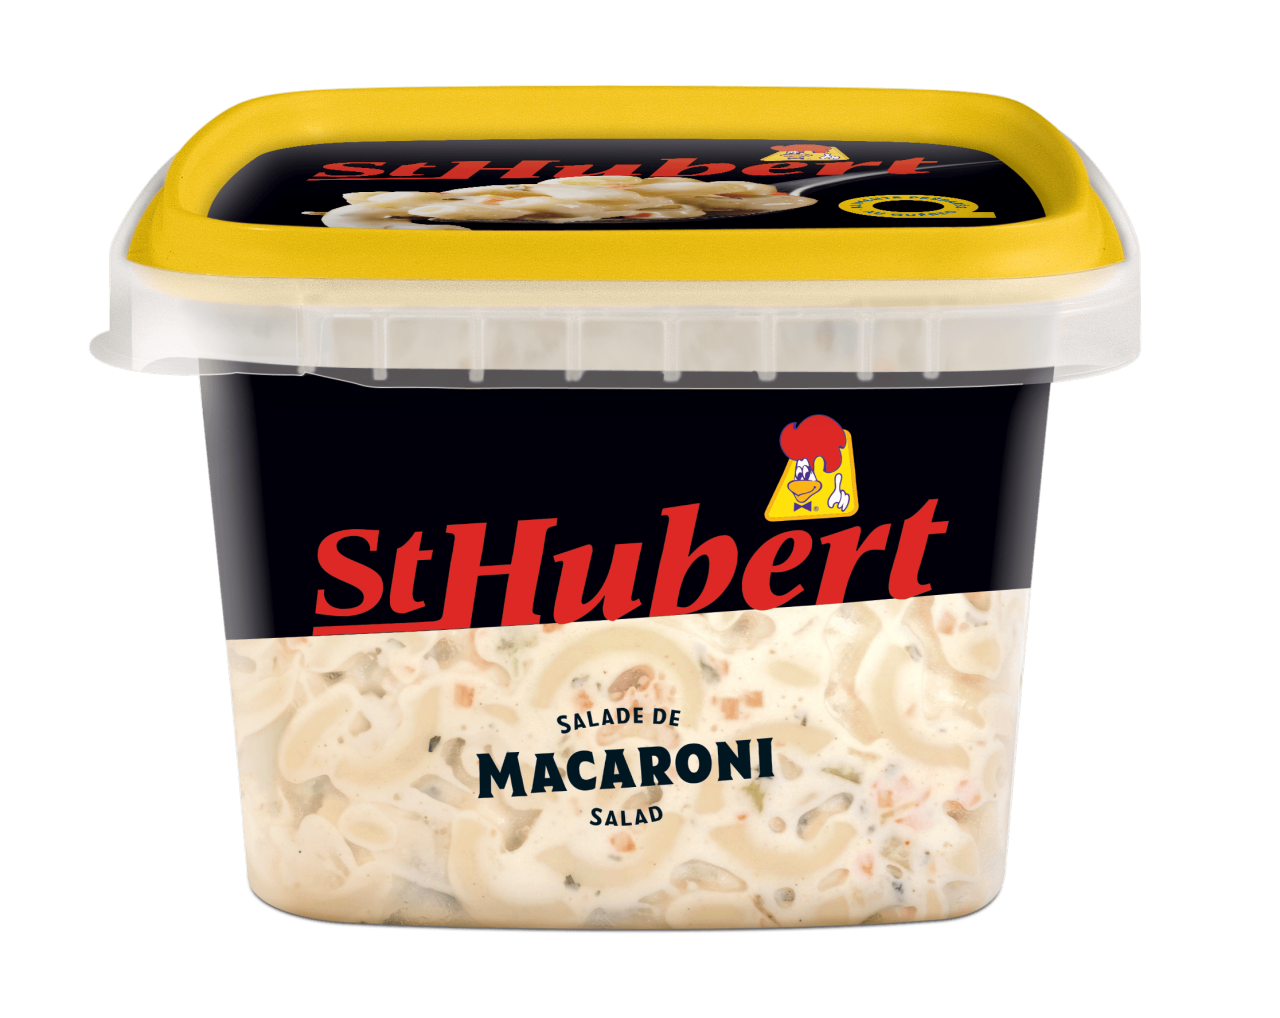 St-Hubert macaroni salad